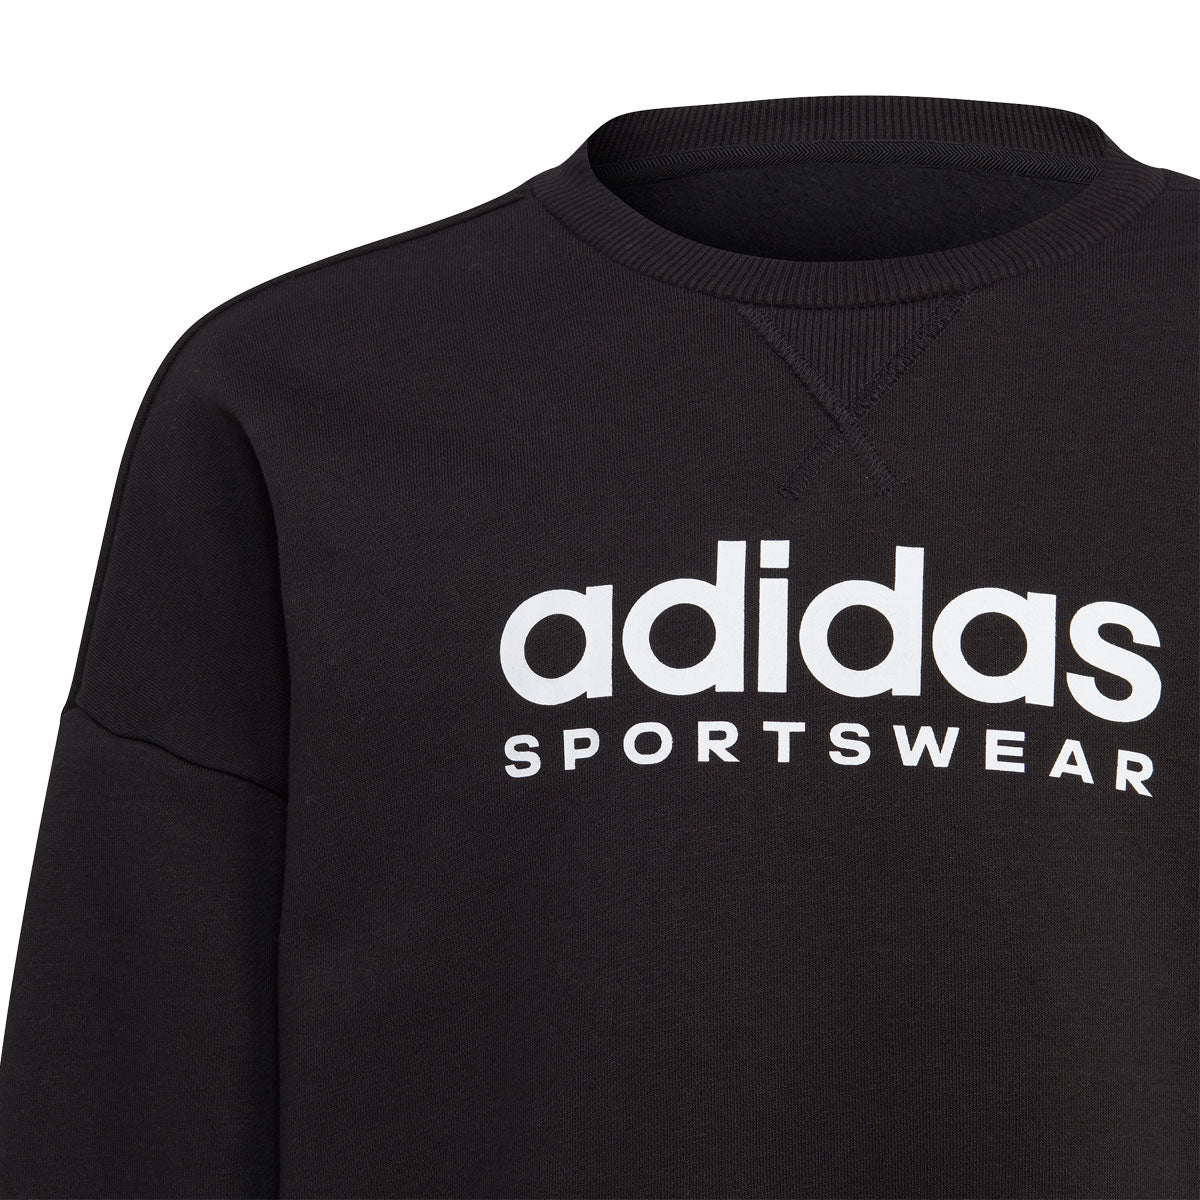 adidas All Season Crew Sweatshirt - Boys - Black/White